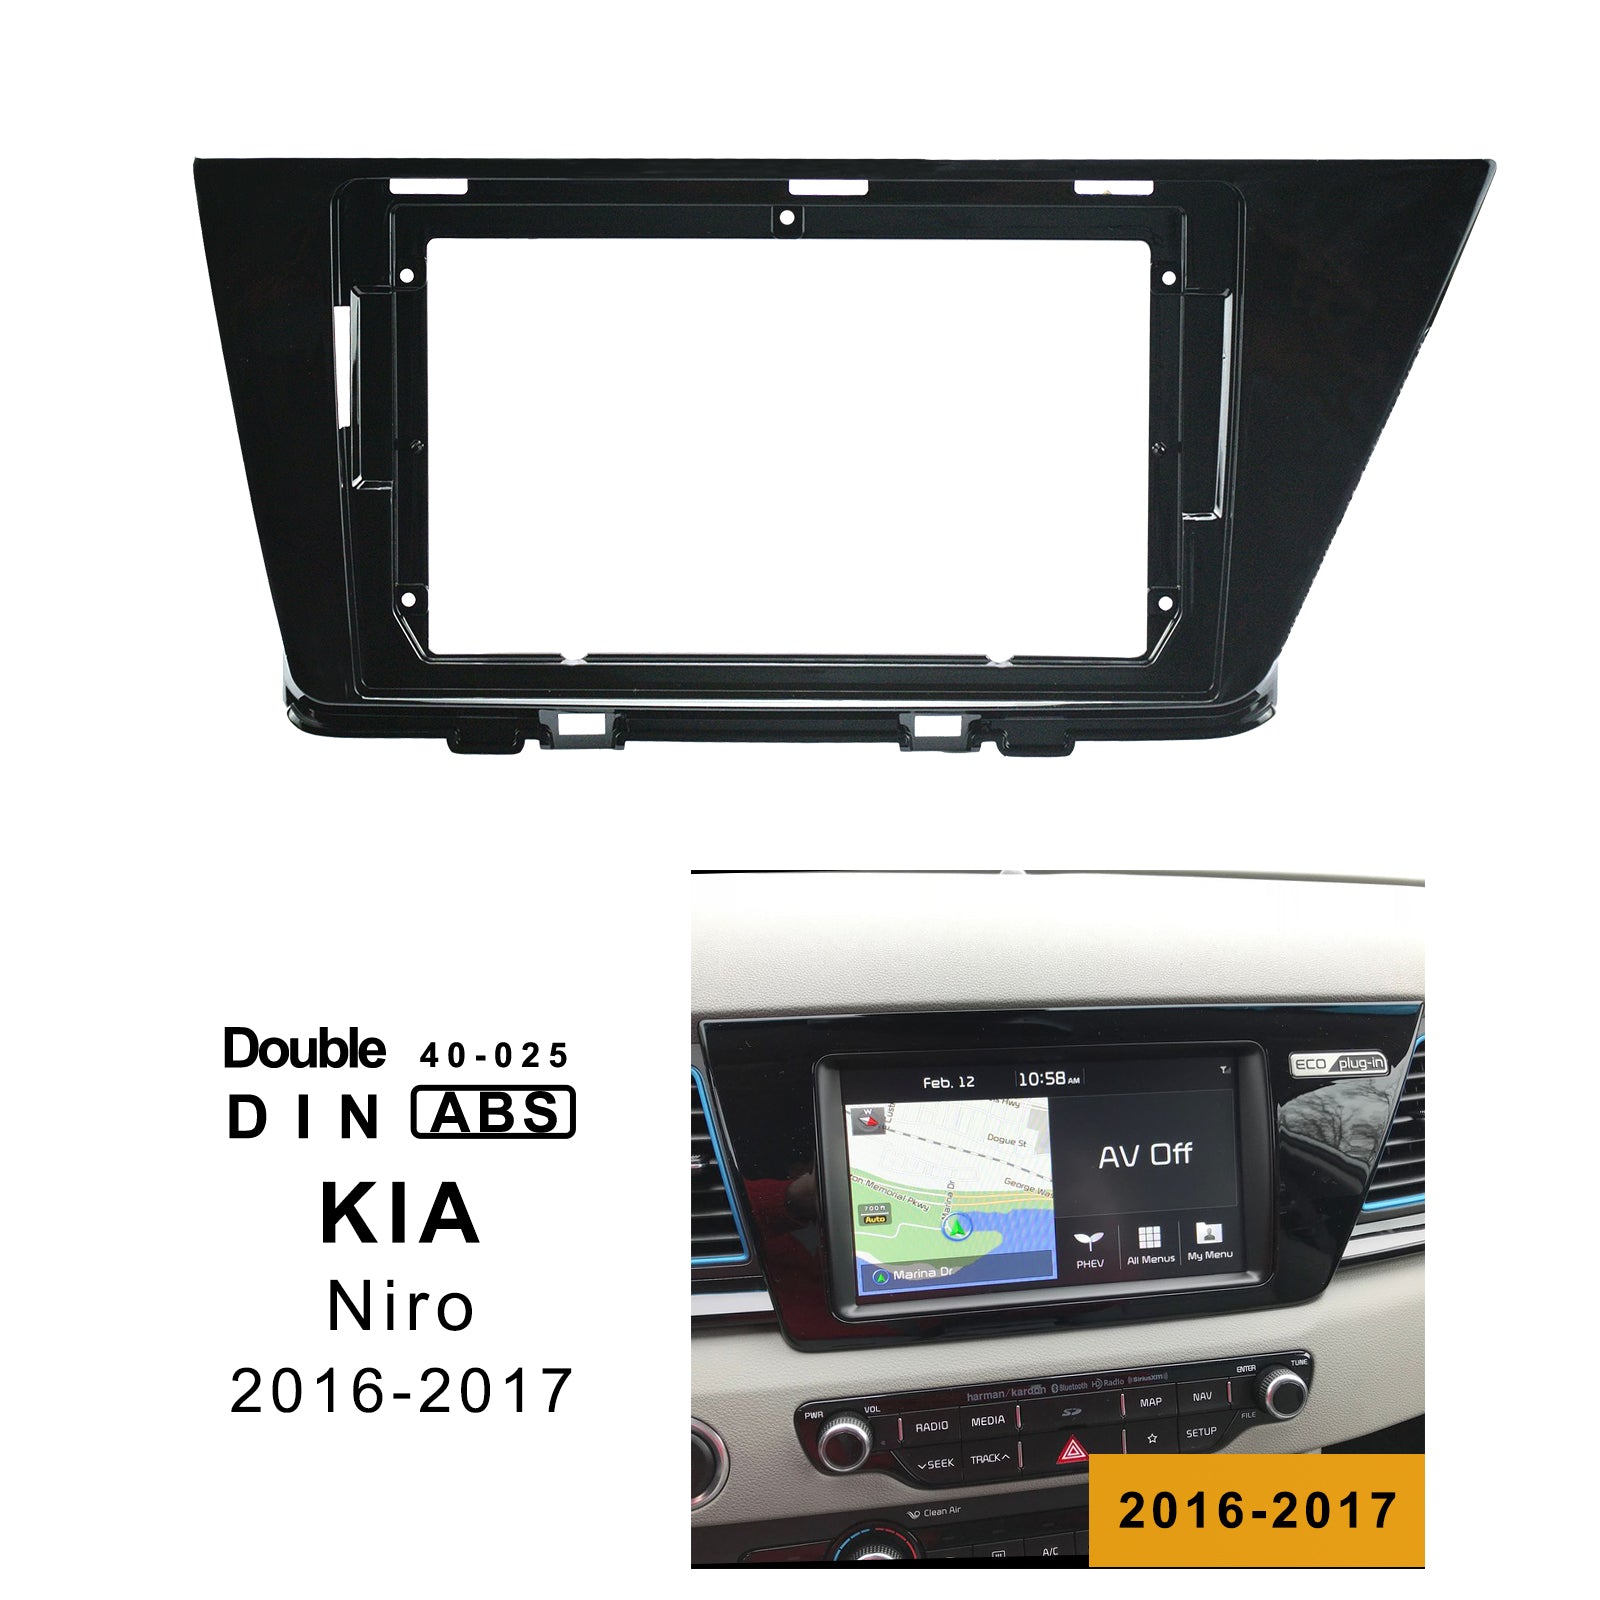 Double Din car Radio In-Dash Mounting Frame for Kia NIRO 2016-2018  | car head unit Radio Installation fascia Facia for 9 inch car stereo Radio in Kia NIRO 2016-2018 - lexxson official store